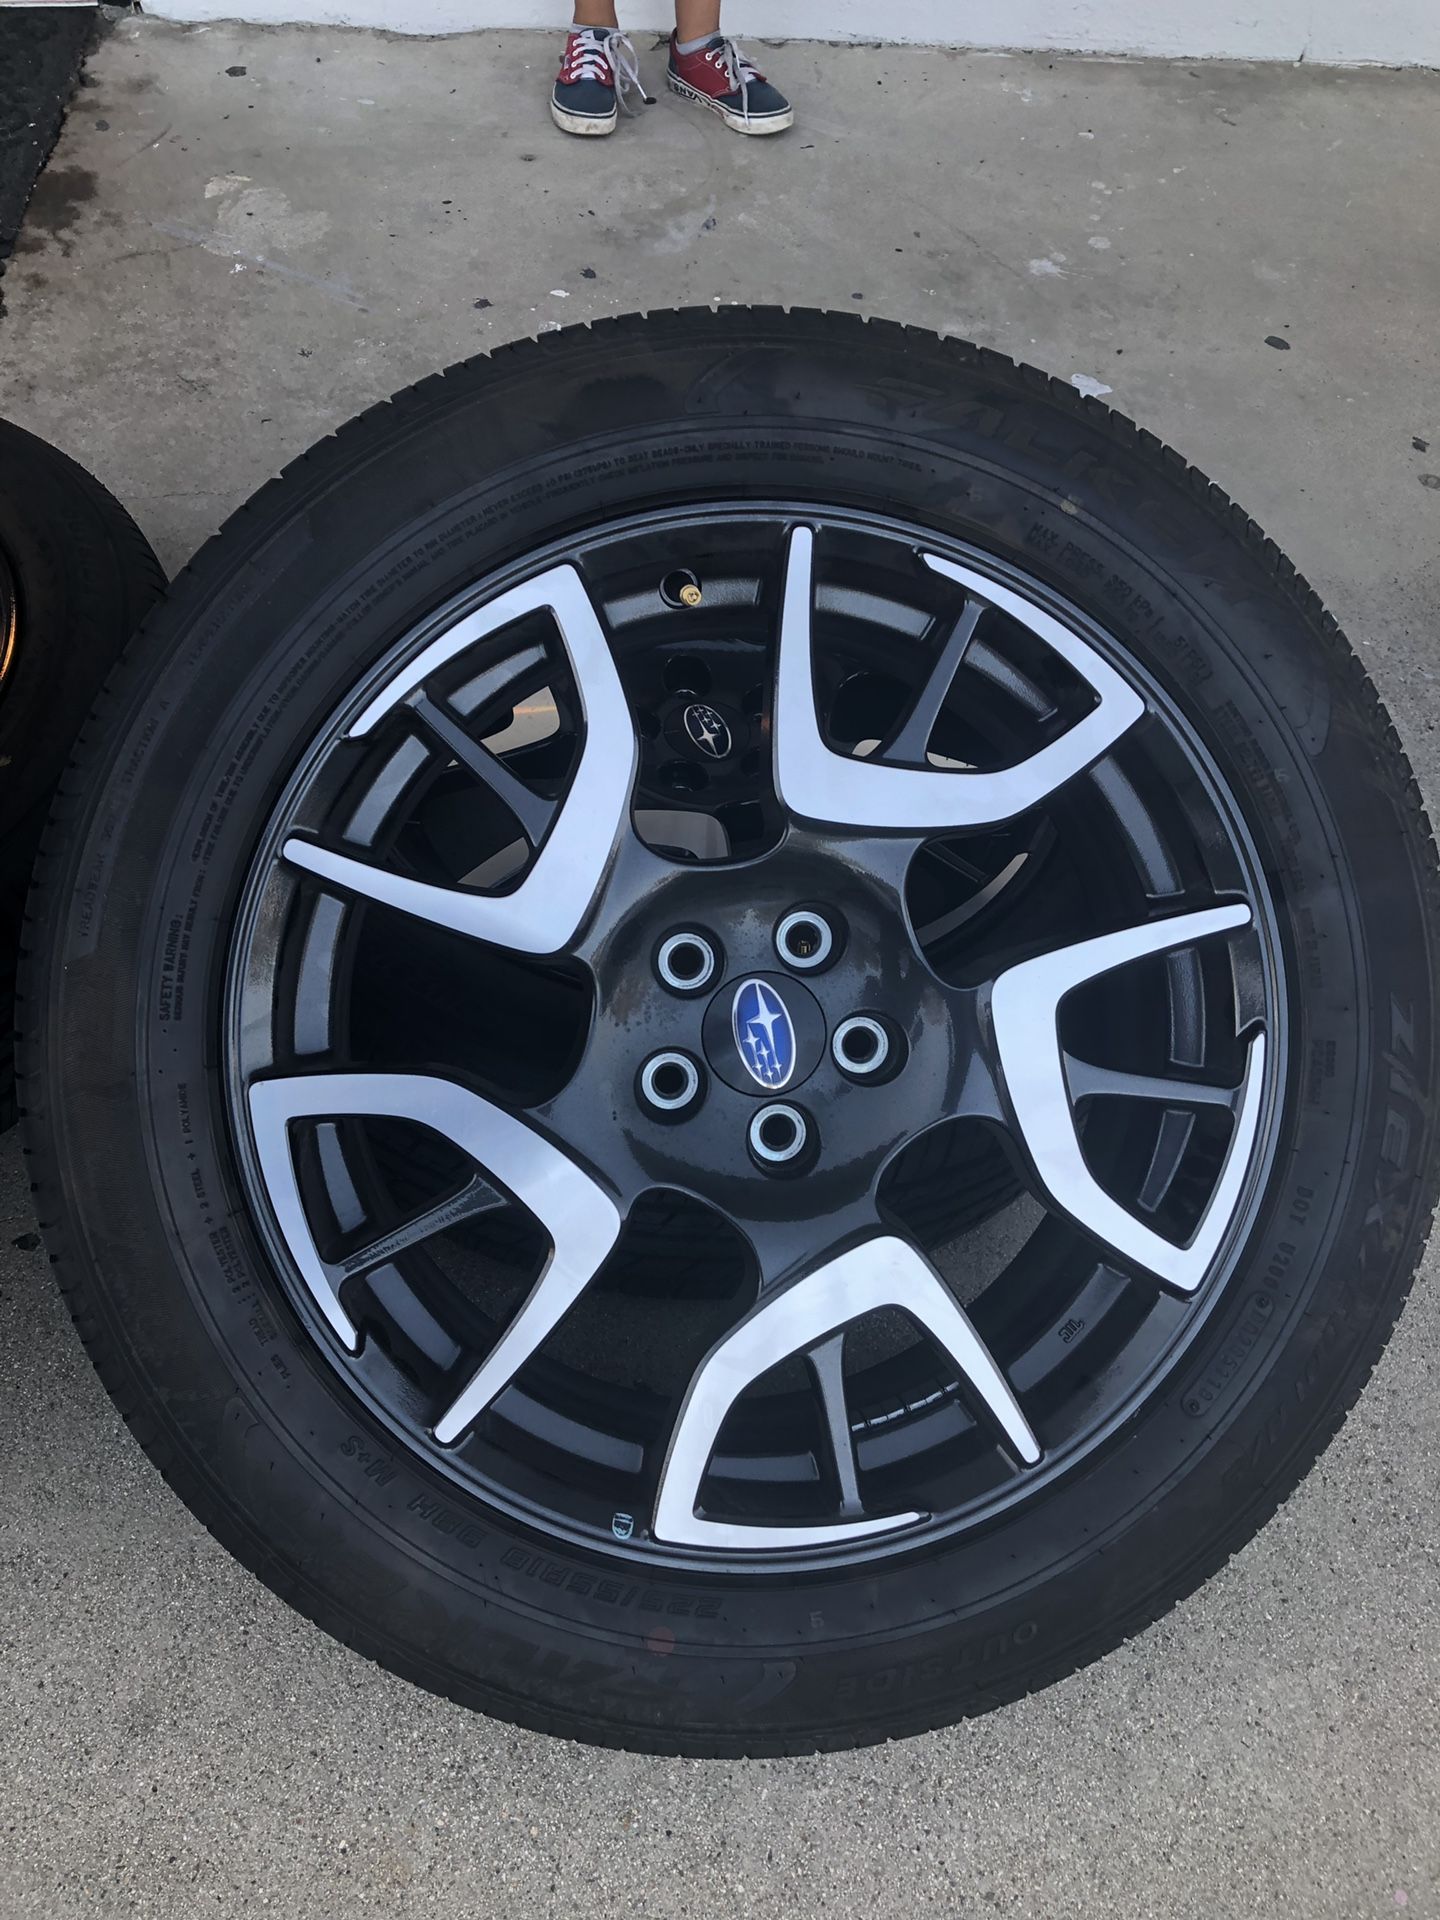 2019 Subaru Crosstrek Tires and Rims